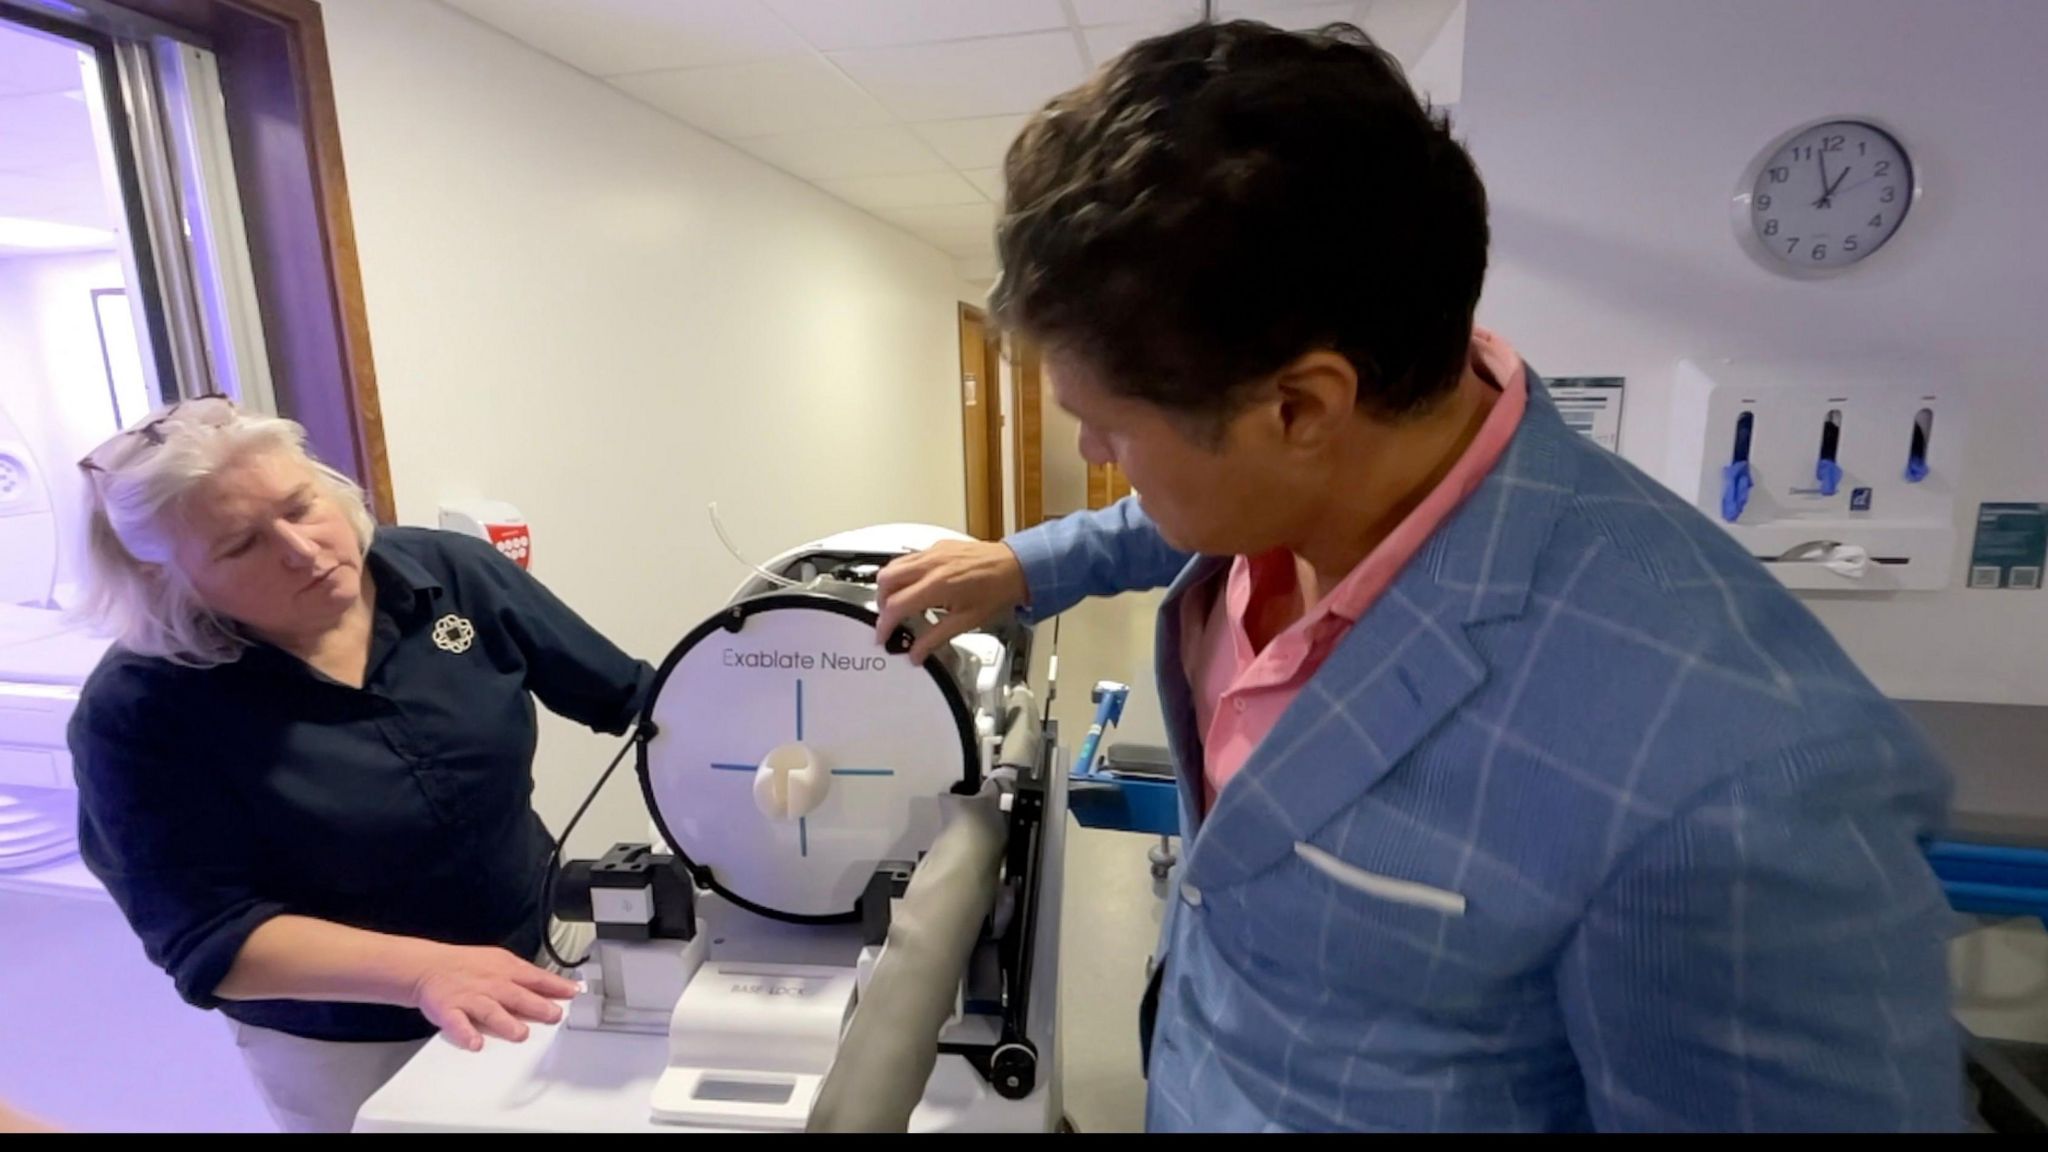 Professor Ludvic Zrinzo showing how the ultrasound machine works